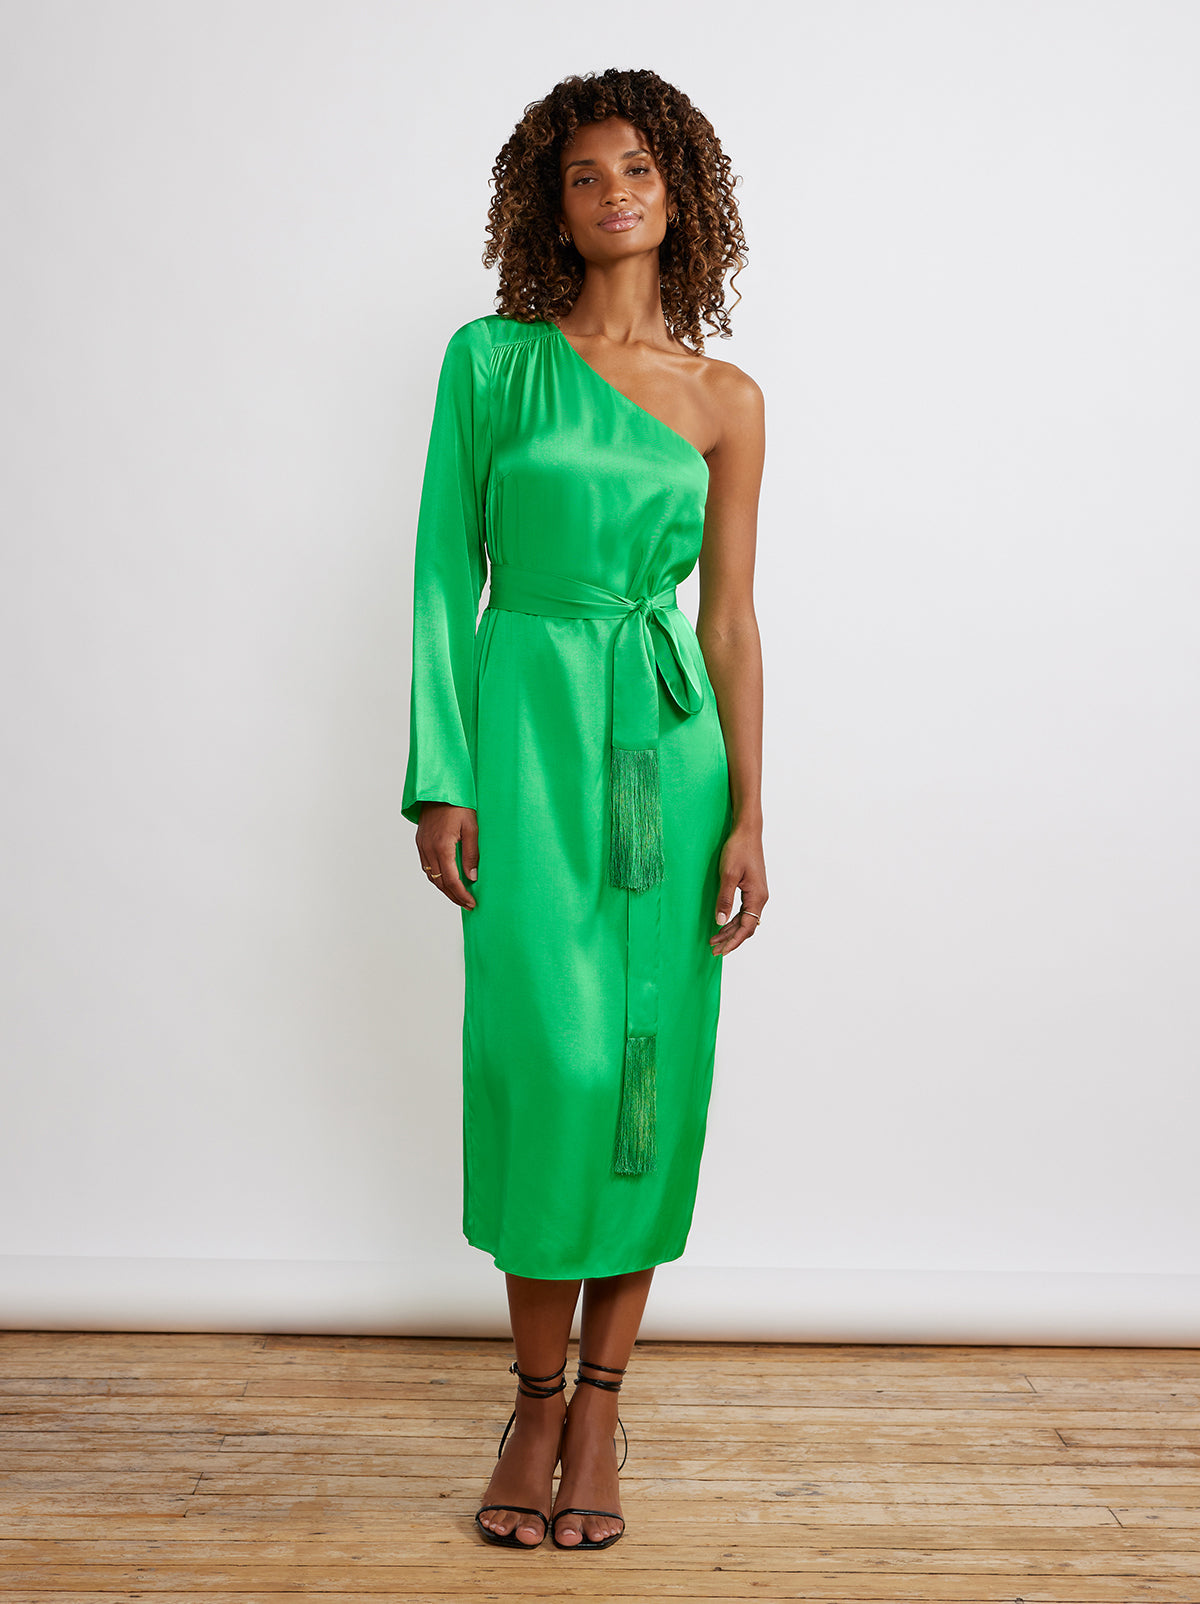 Amber Green One Shoulder Dress by KITRI Studio